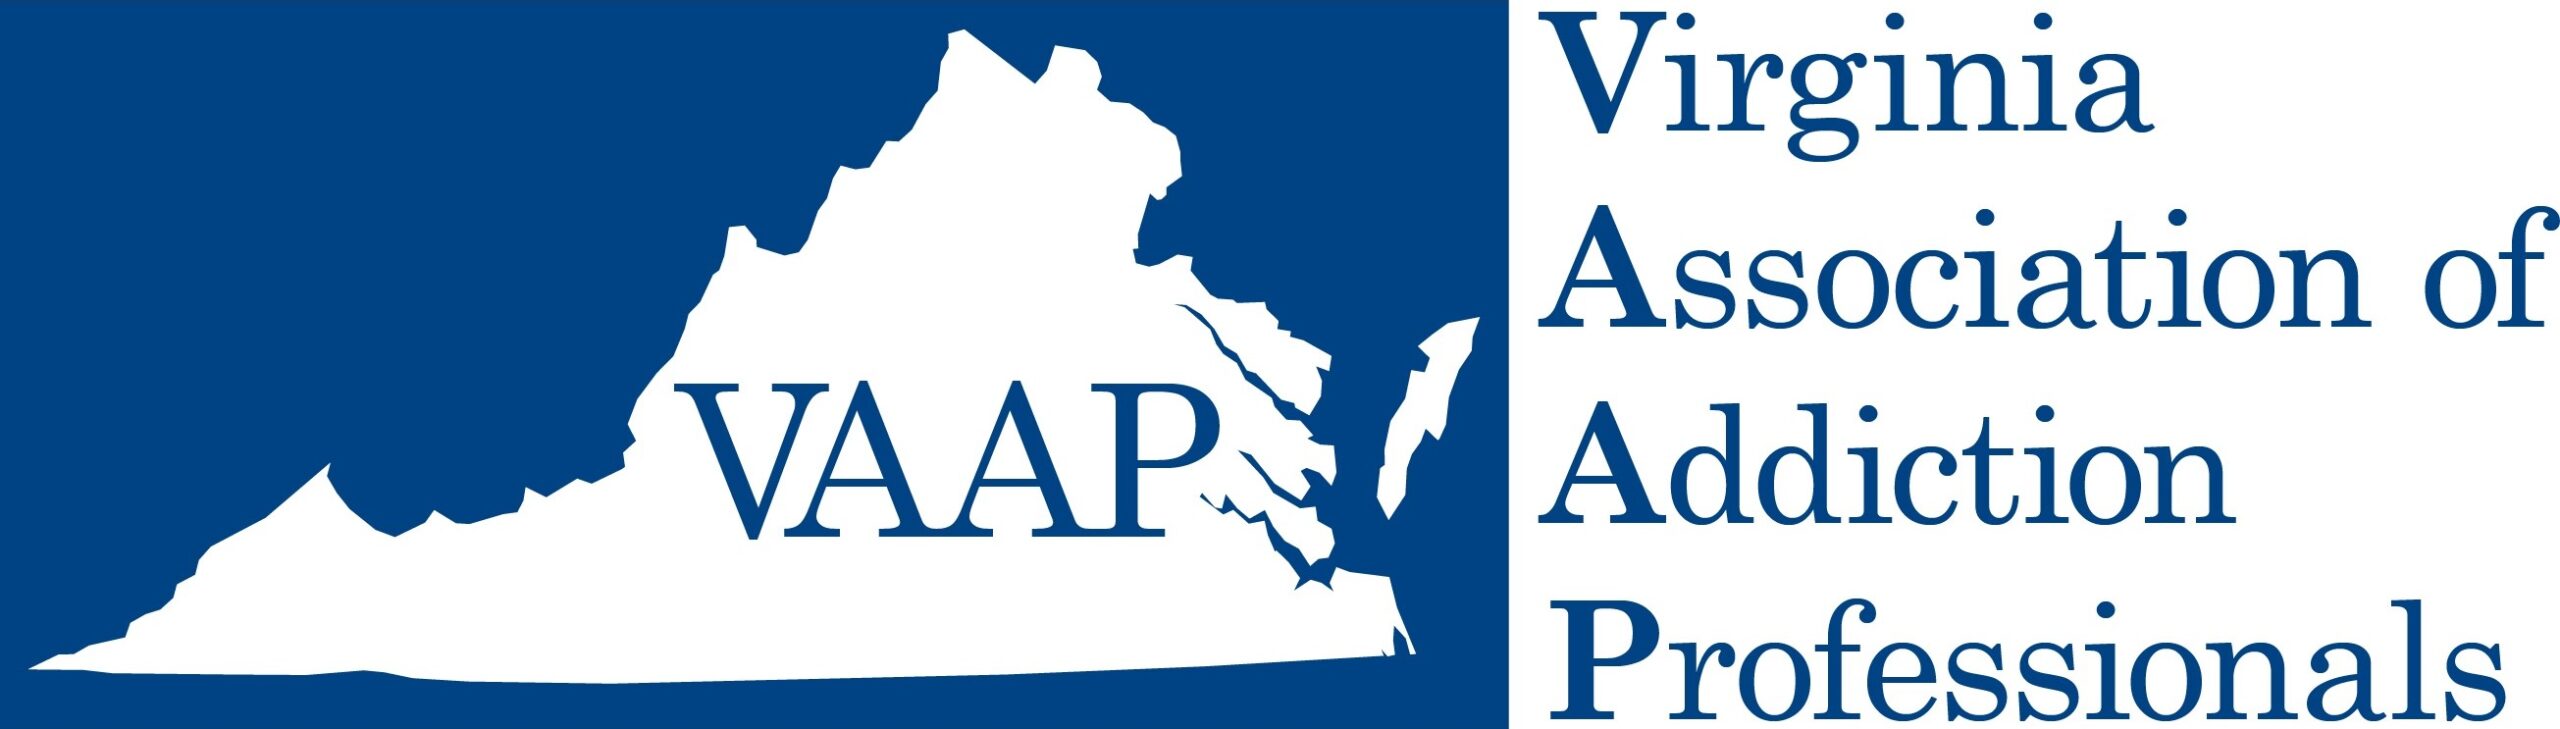 Virginia Association of Addiction Professionals